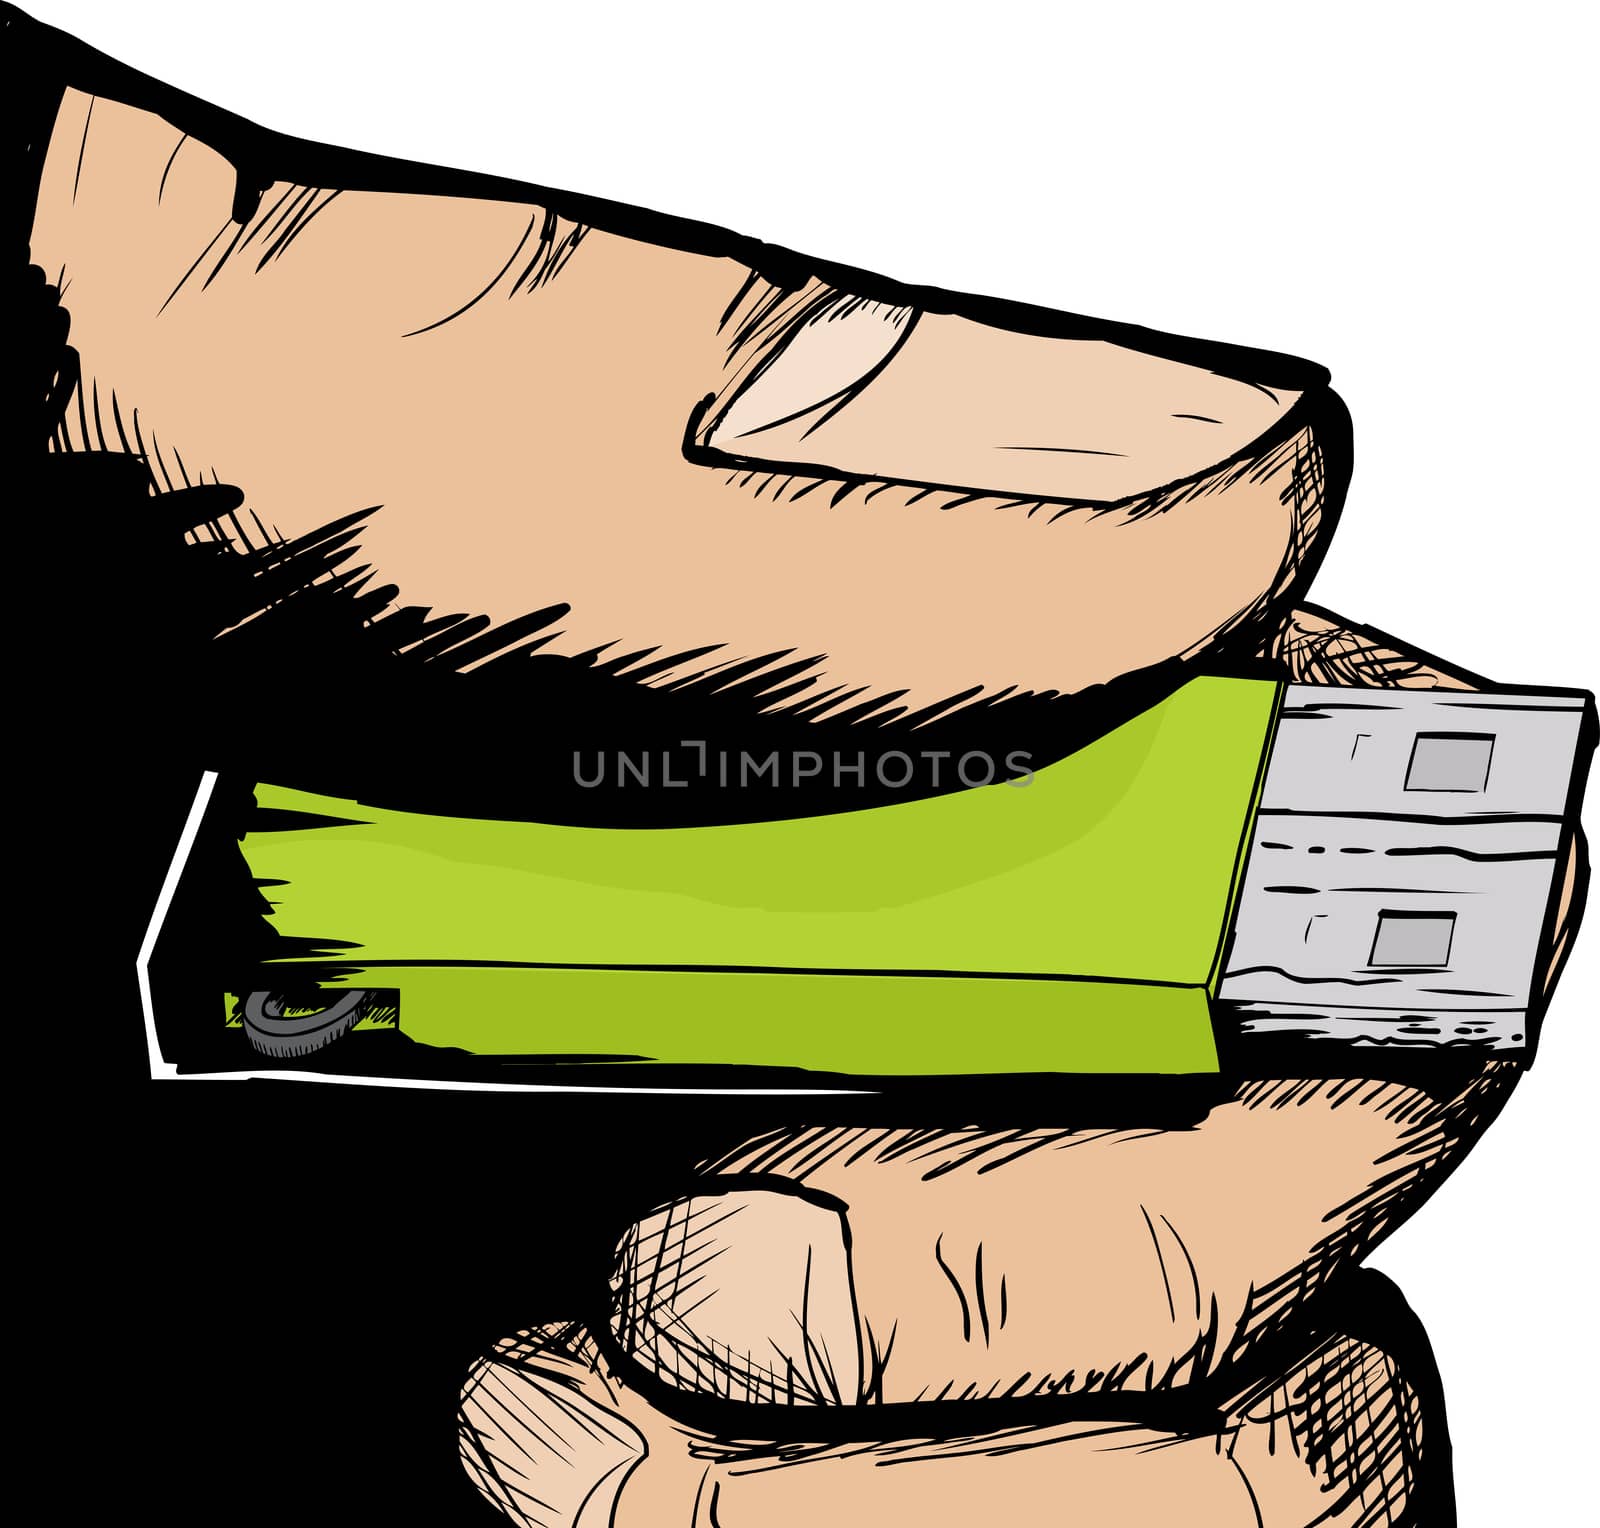 Cartoon illustration of USB thumbdrive in hand